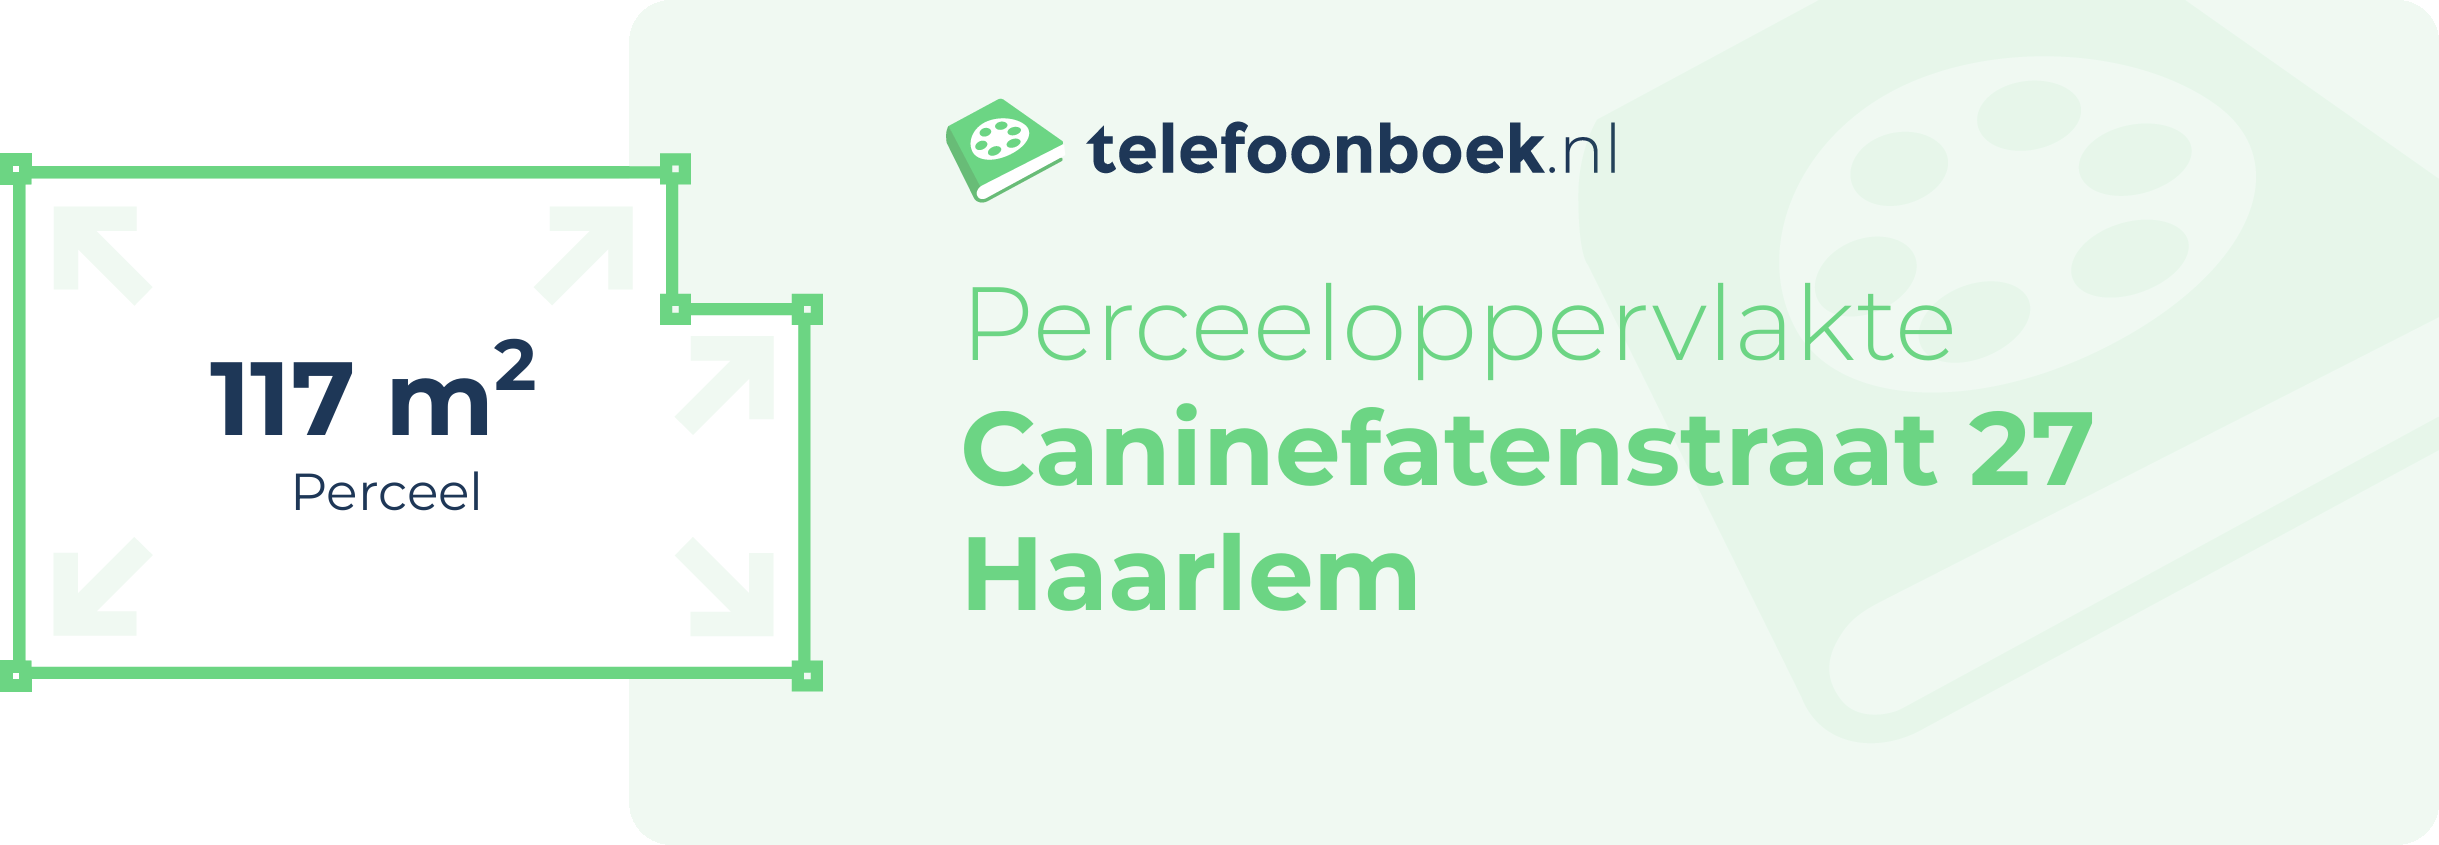 Perceeloppervlakte Caninefatenstraat 27 Haarlem